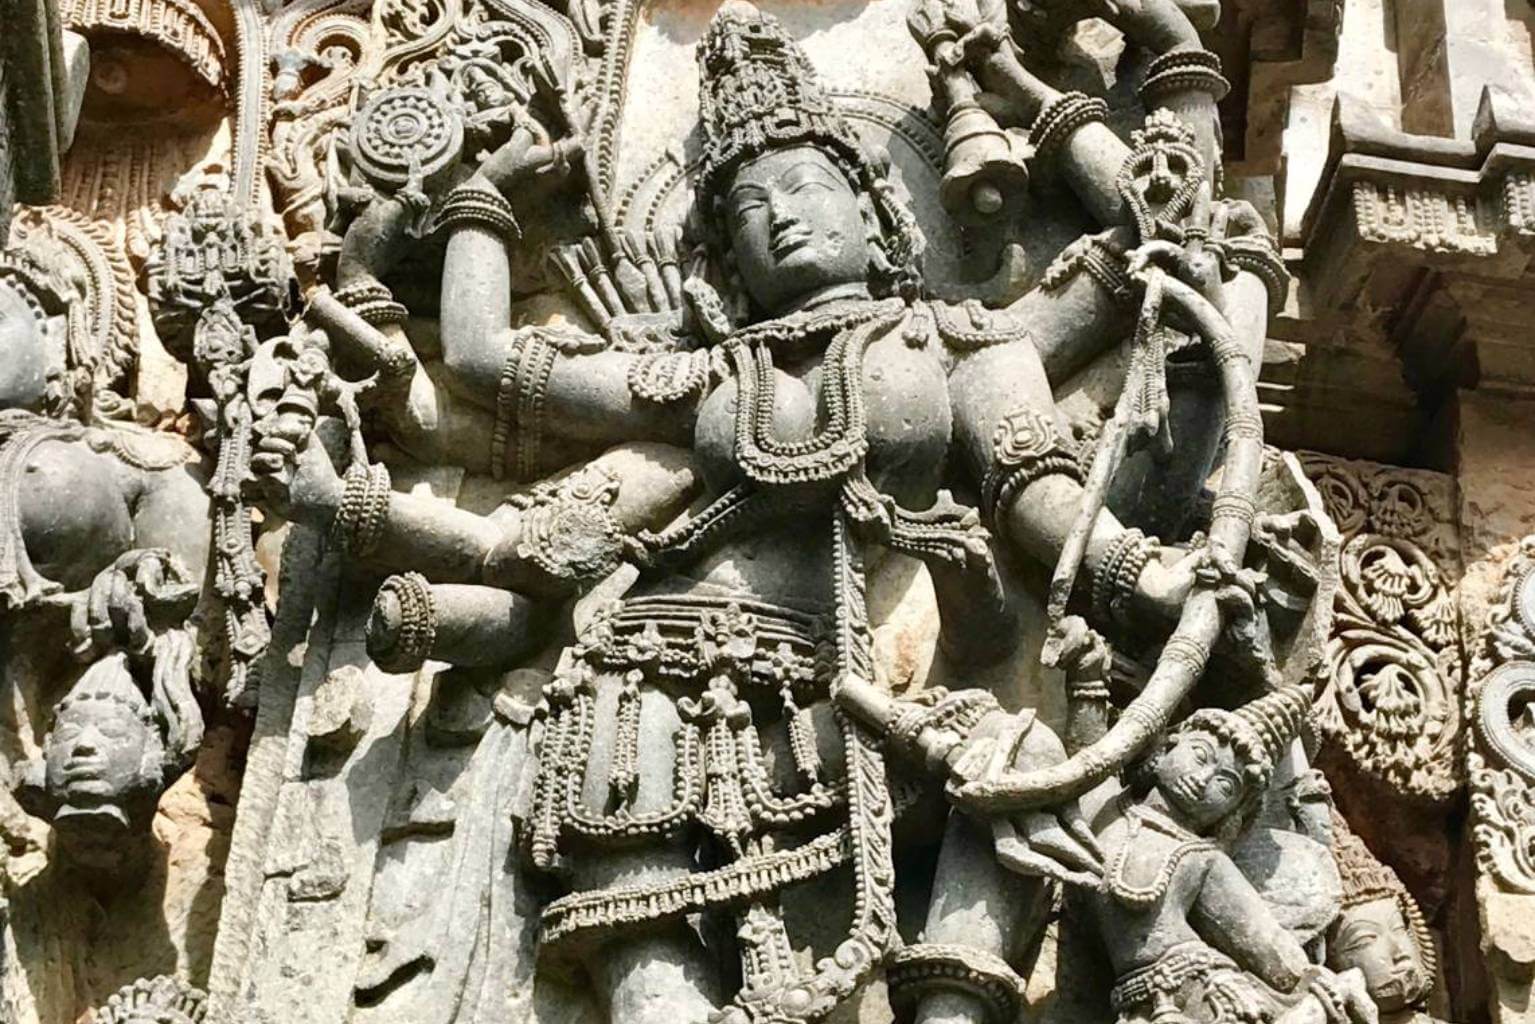 Crop of Durga as Mahishasuramardini killing the buffalo demon. Hoysala Empire era sculpture, 12th century. Halebid, Karnataka, India. ©Heather Elton